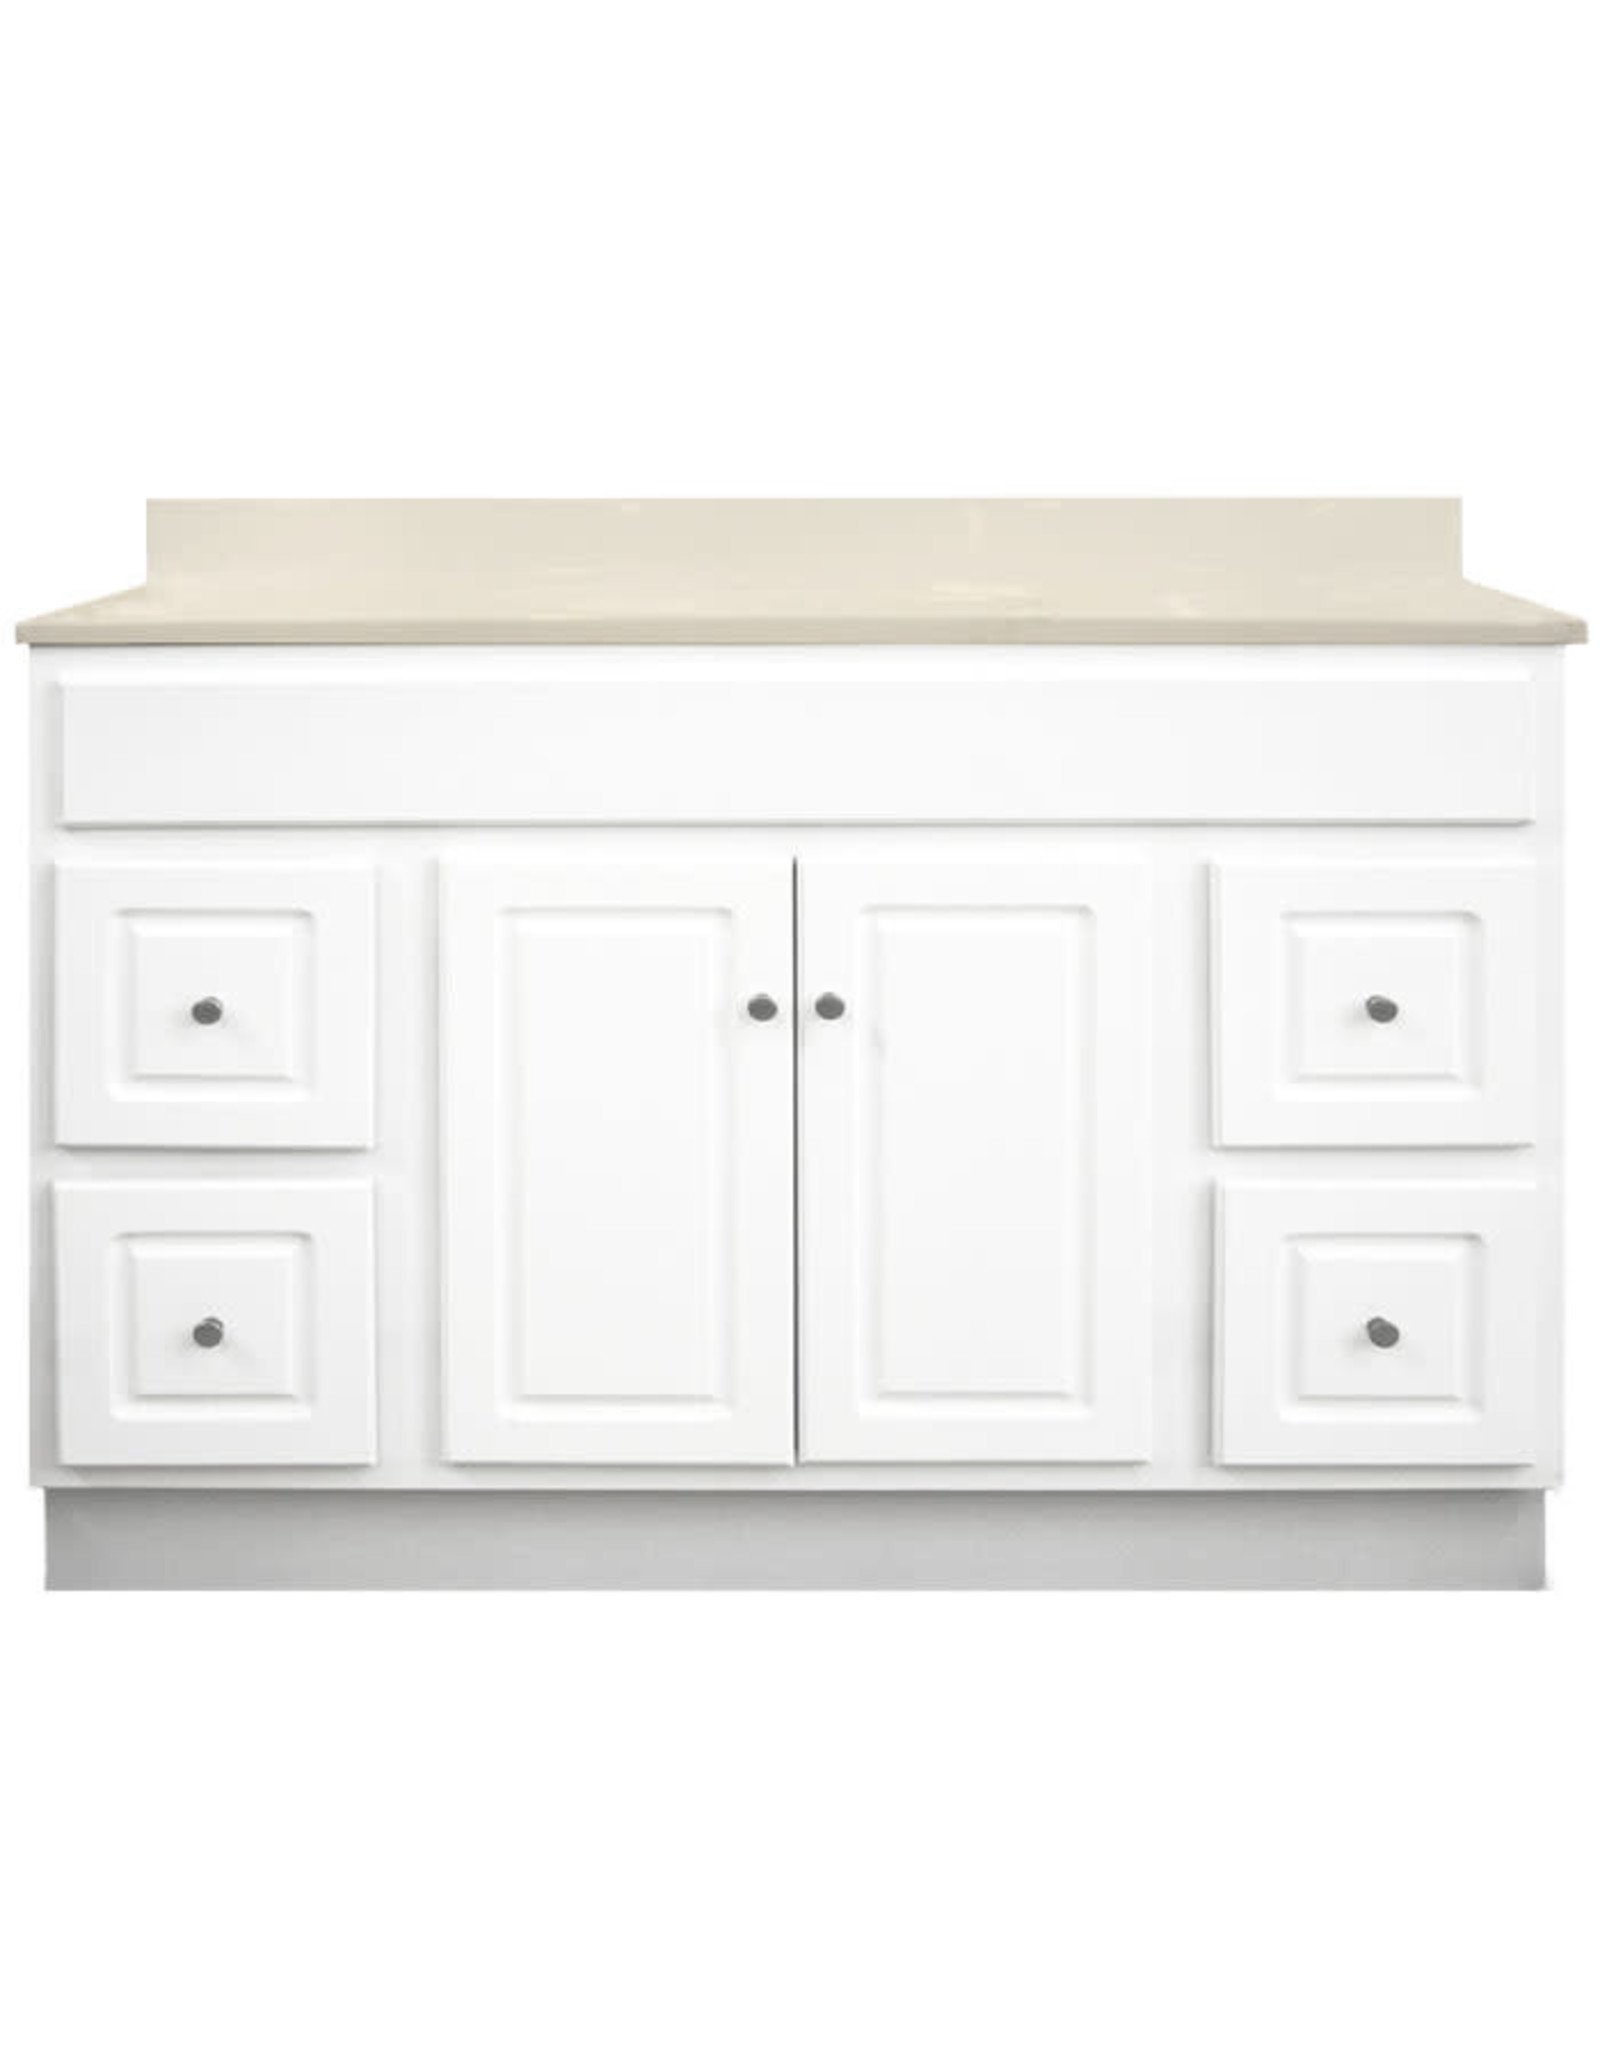 BKS Glossy White Vanity Cabinet 48"W x 18"D x 34 ½"H - 2 Doors, 4 Dra (2L,2R), Top Blank